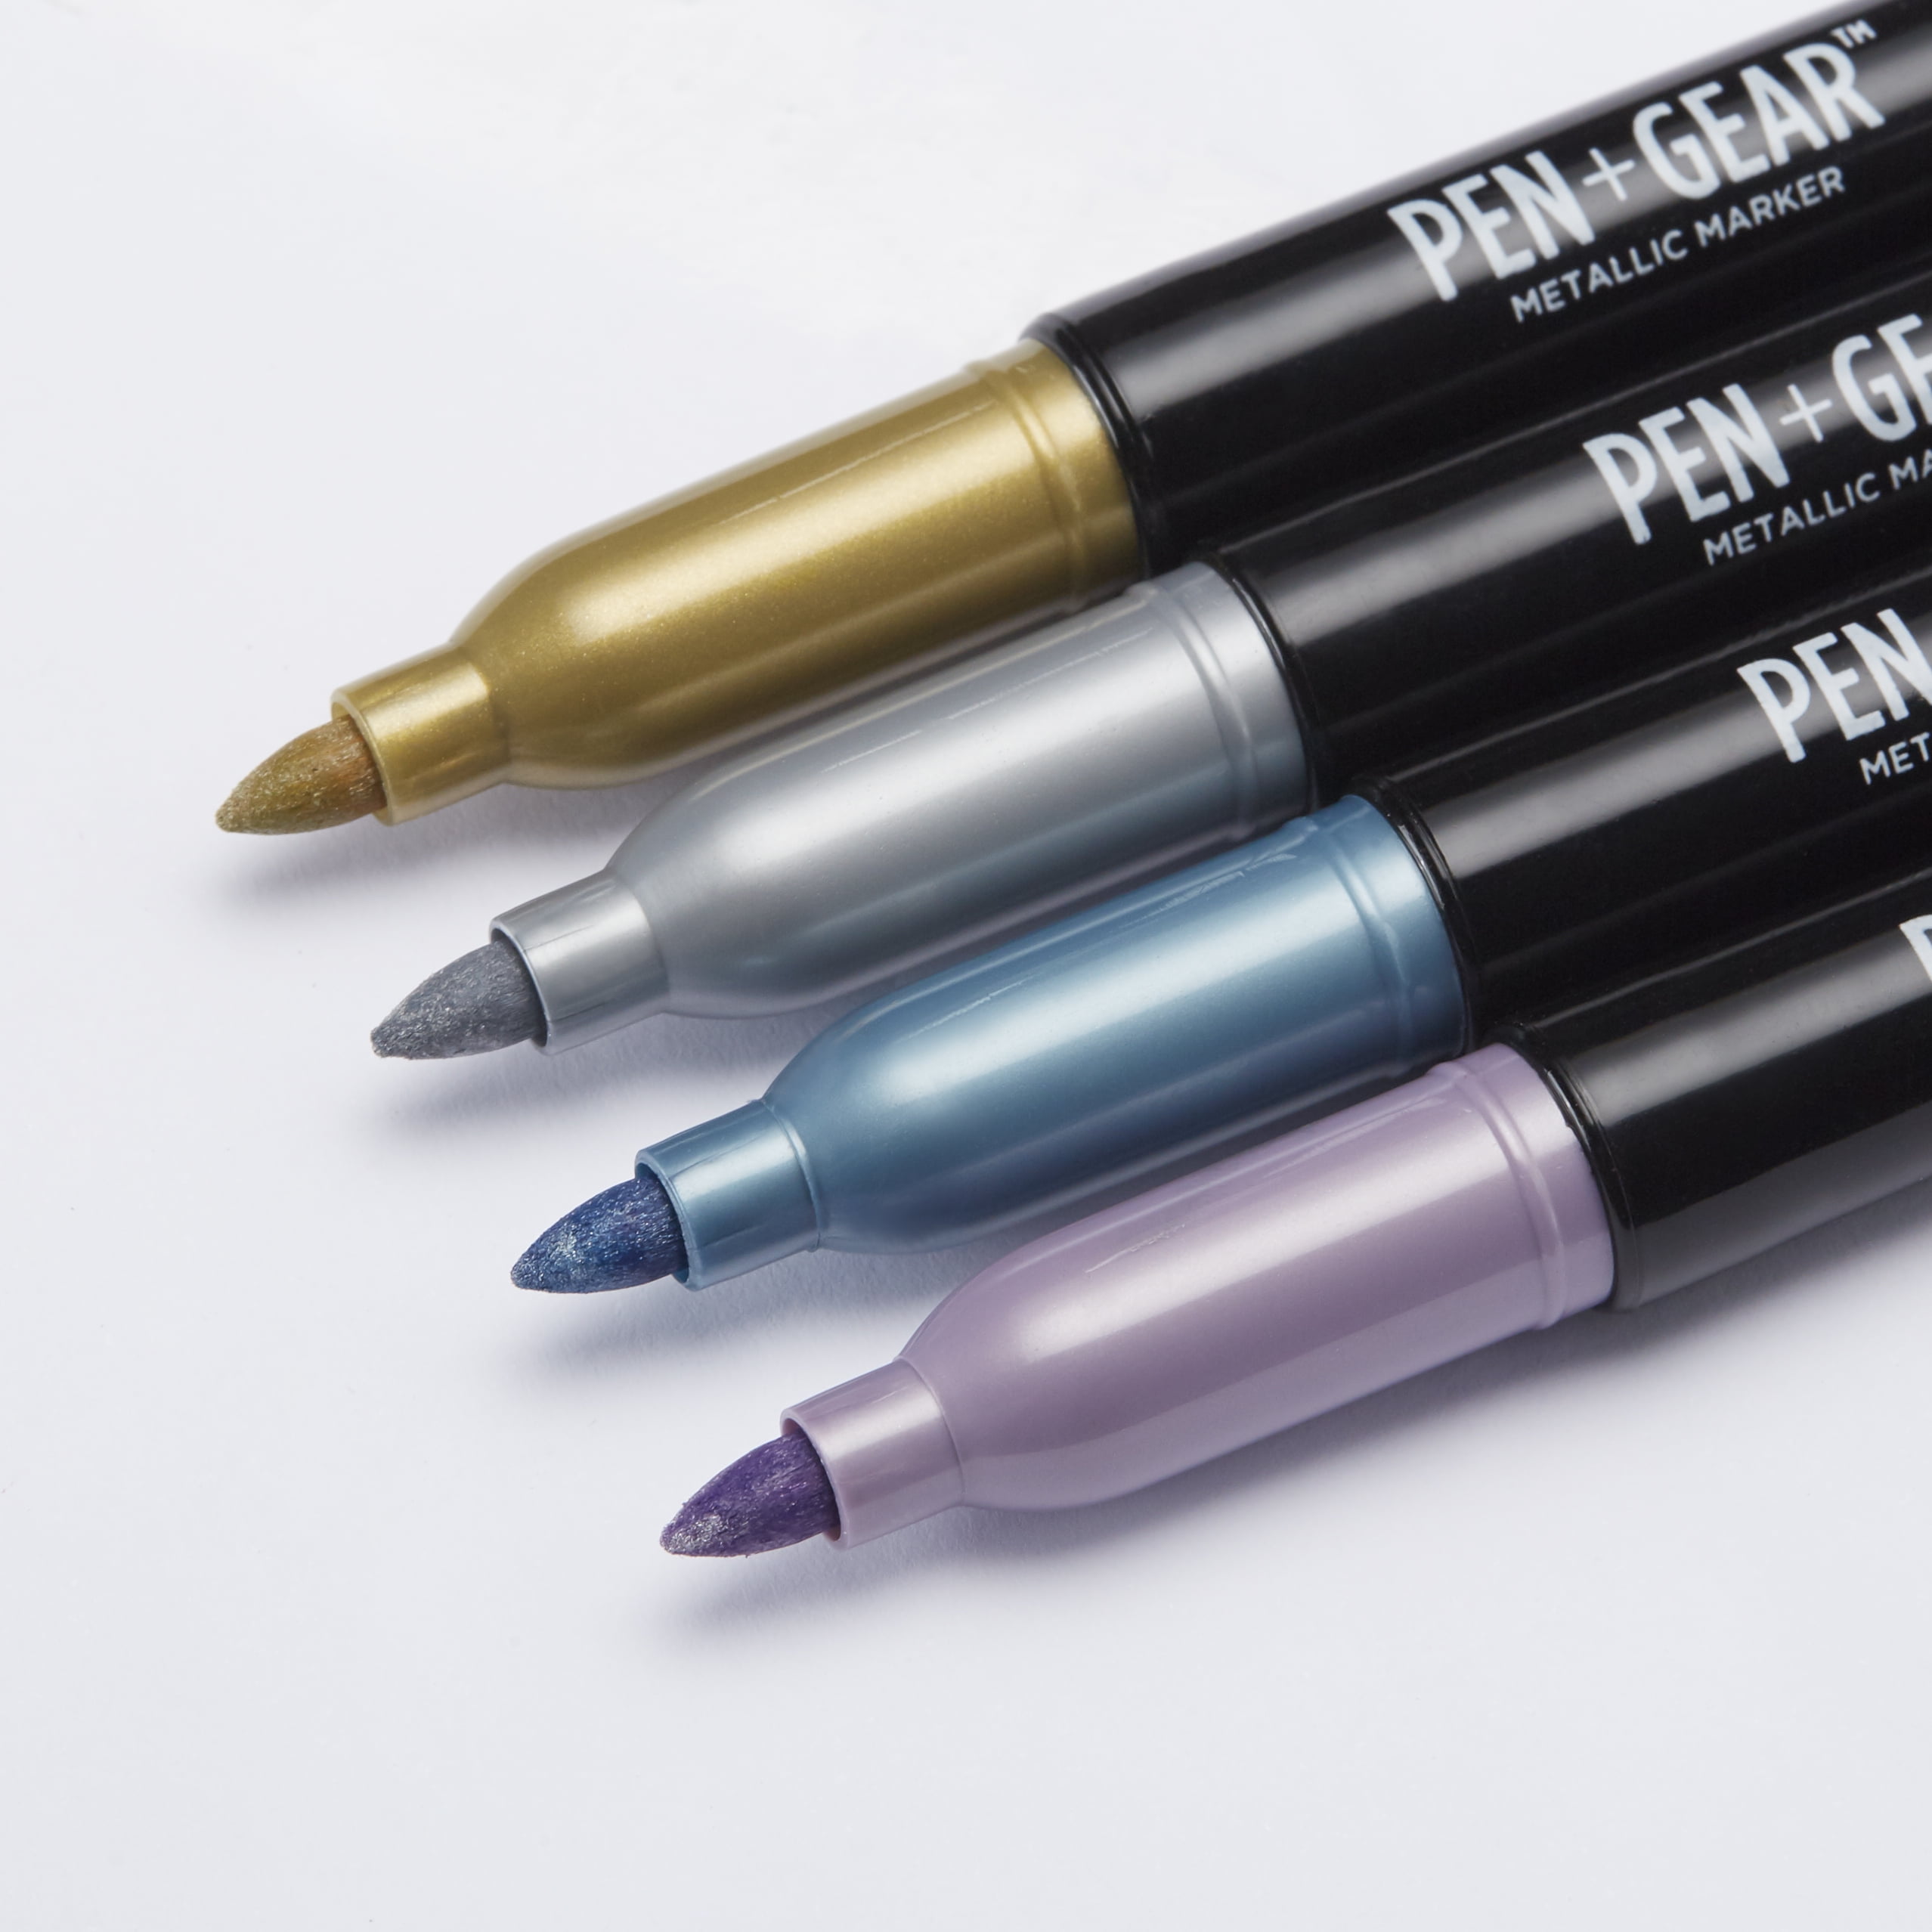 Promo Pinncorporate Metallic Pens